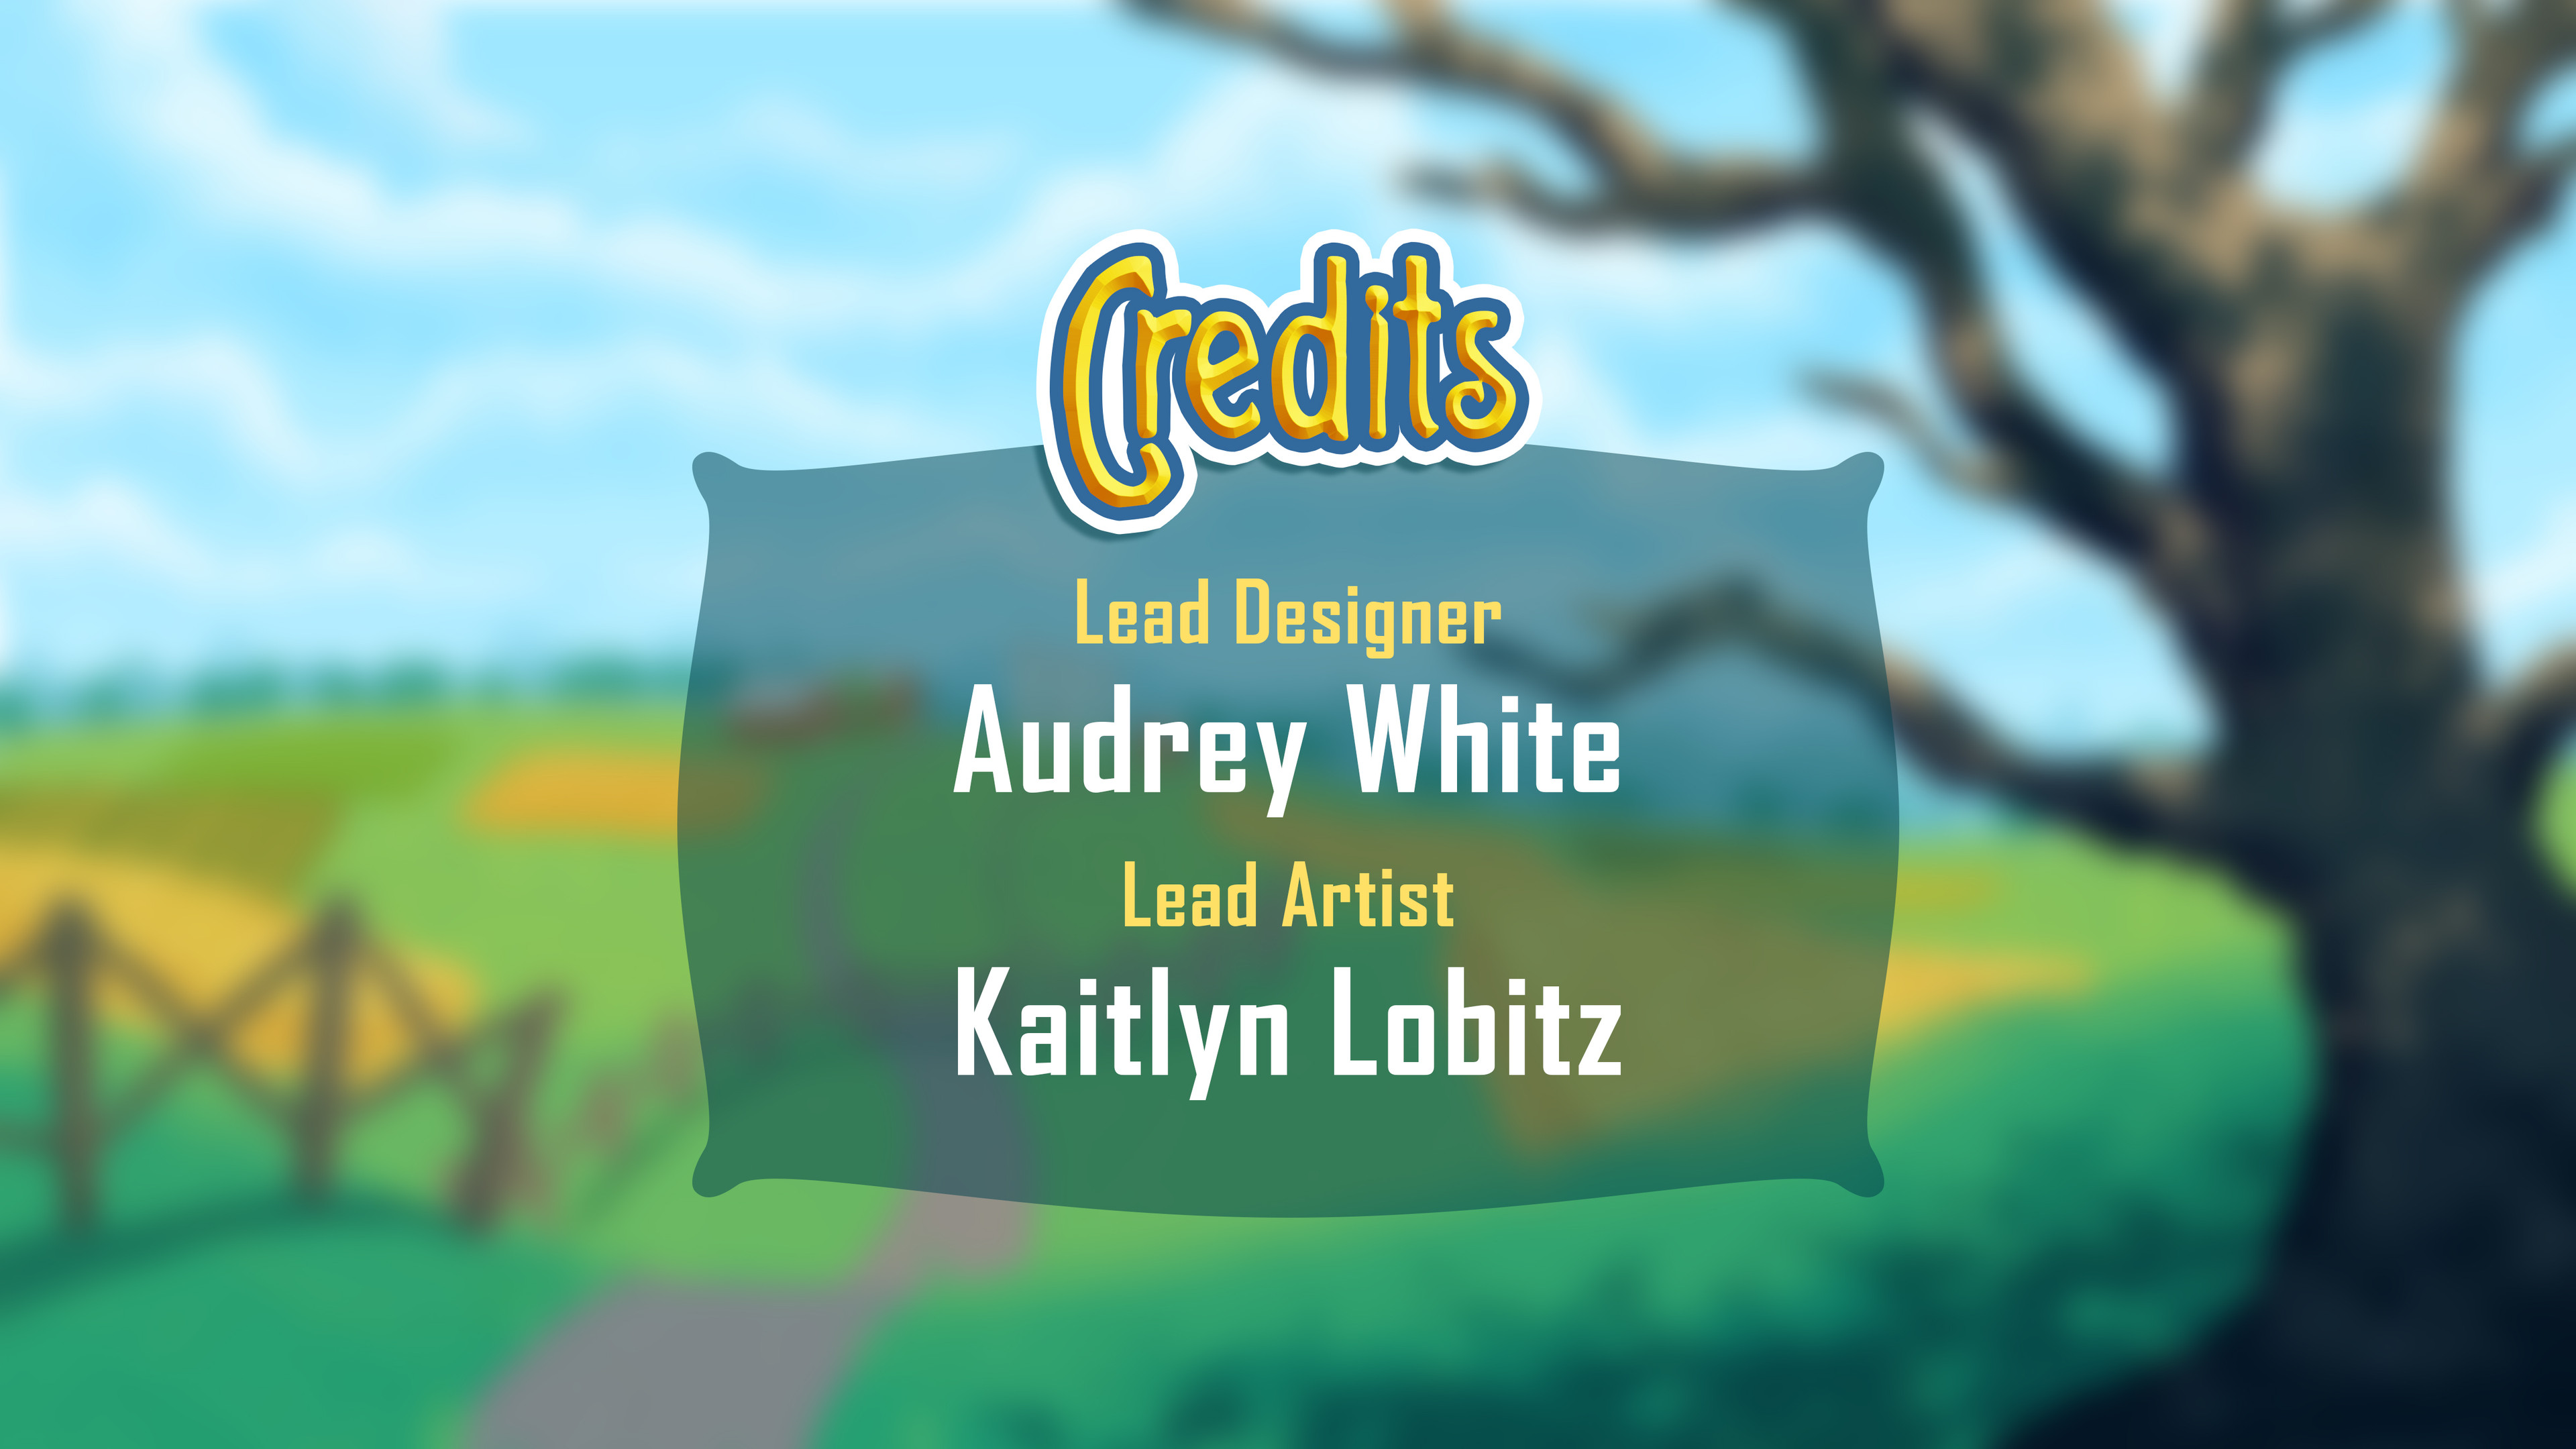 Credits - Lead Designer Audrey White - Lead Artist Kaitlyn Lobitz